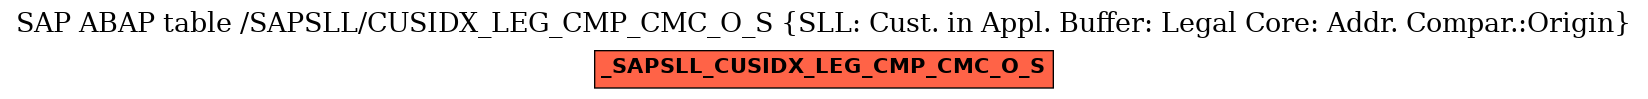 E-R Diagram for table /SAPSLL/CUSIDX_LEG_CMP_CMC_O_S (SLL: Cust. in Appl. Buffer: Legal Core: Addr. Compar.:Origin)